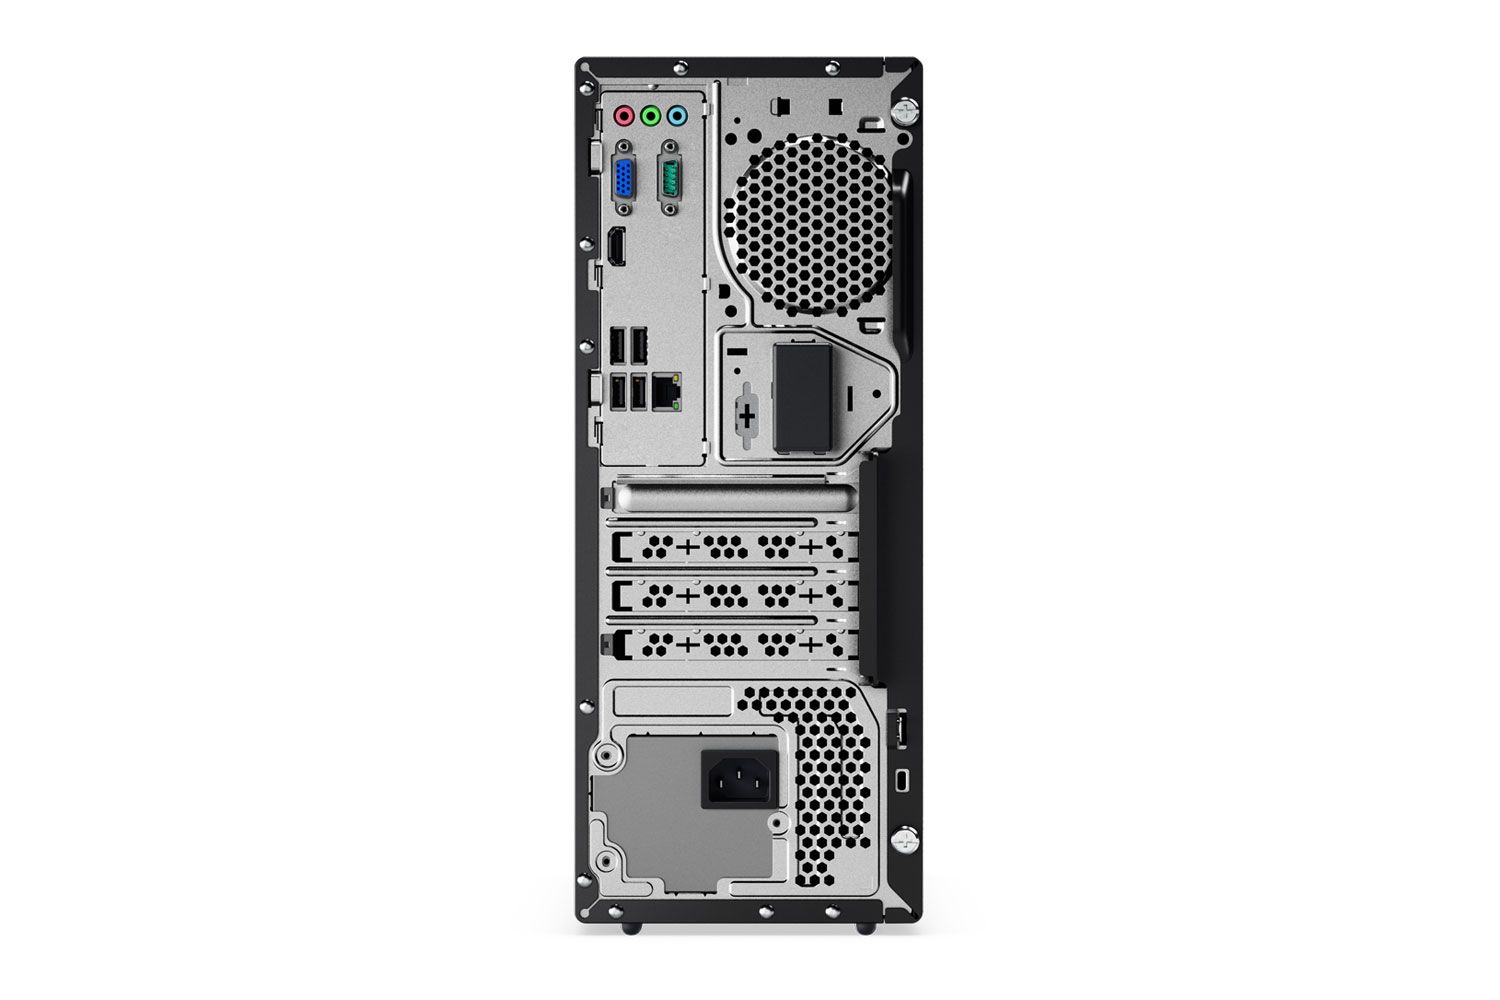 Bundle Lenovo V520 Tower PC | Intel Core i5-6400T 2.2Ghz | Ram 16Gb | SSD 256Gb | Windows 10 Pro + Monitor AOC 24